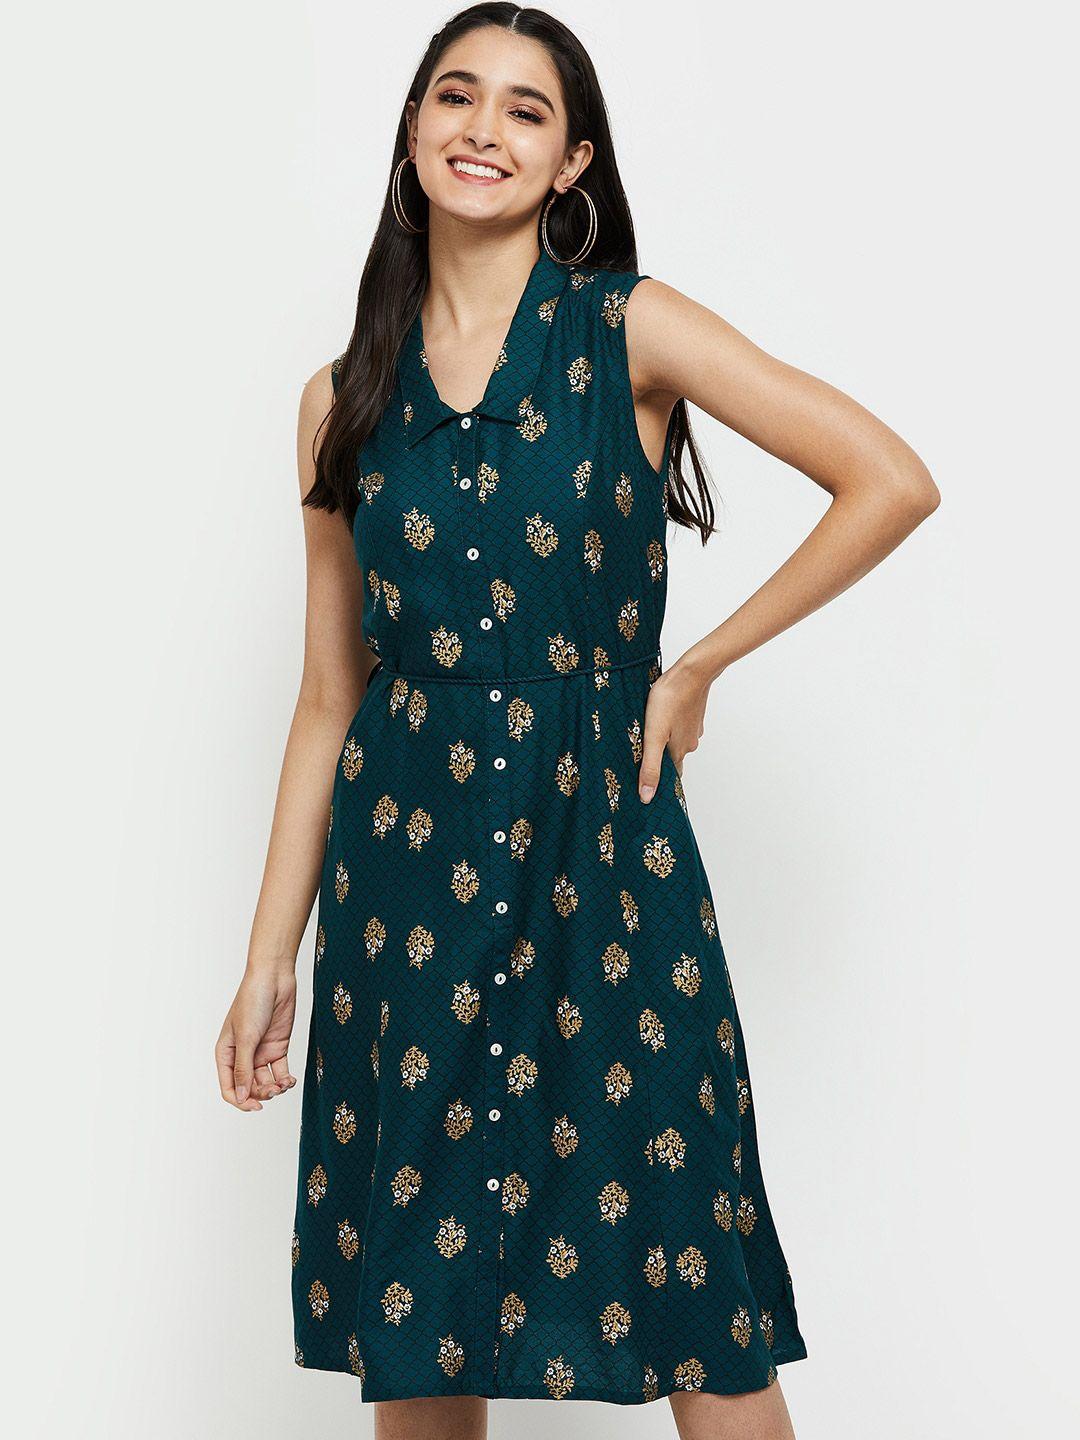 max-teal-green-&-golden-ethnic-motifs-ethnic-a-line-dress